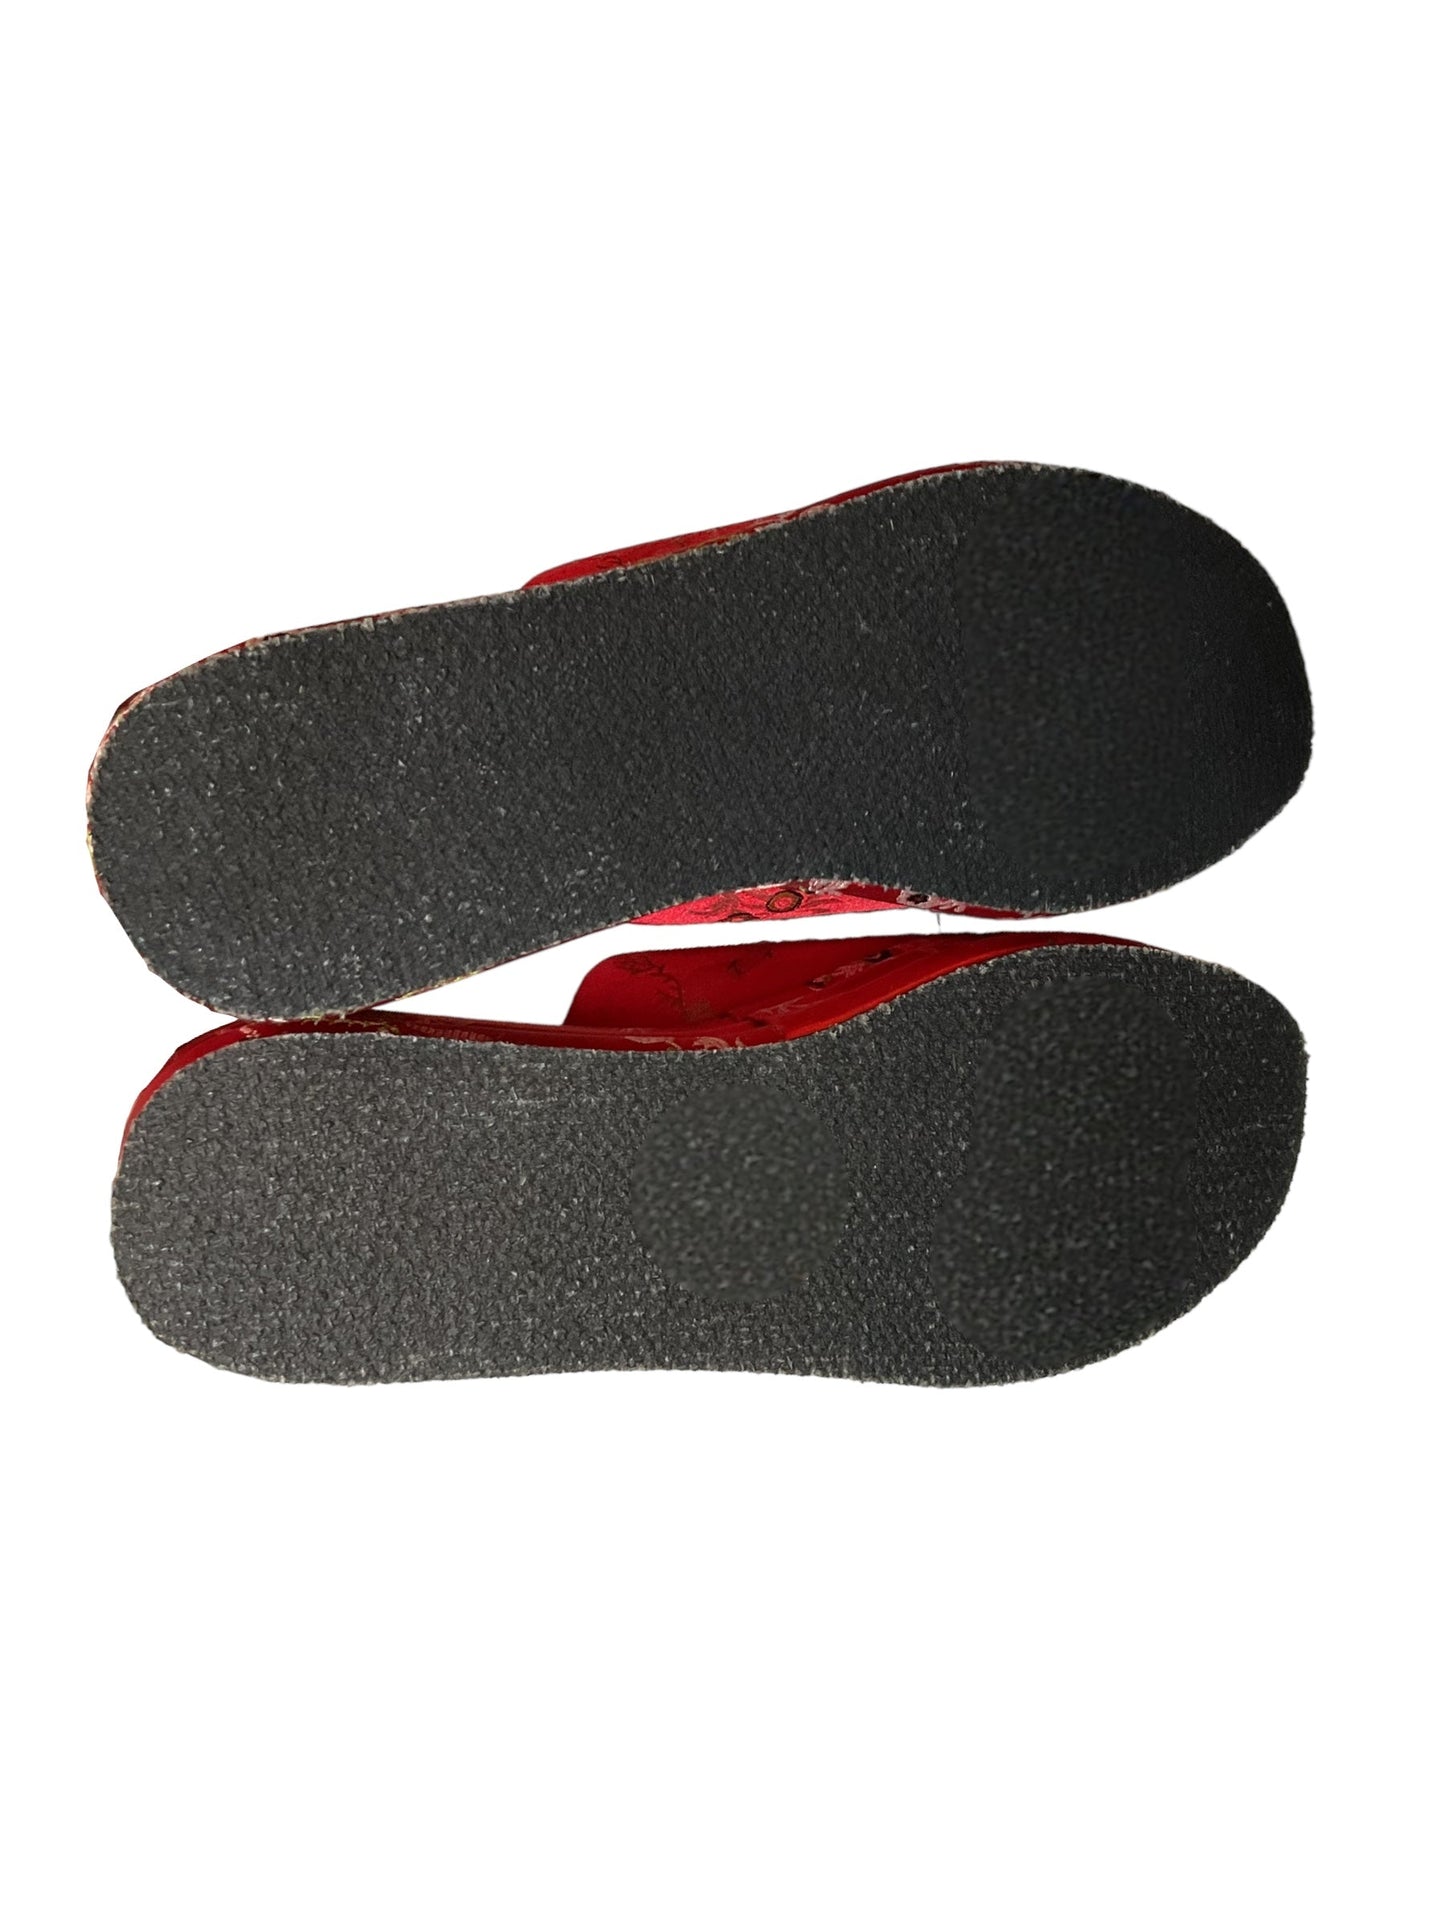 Red Sandals Heels Platform Free People, Size 6.5